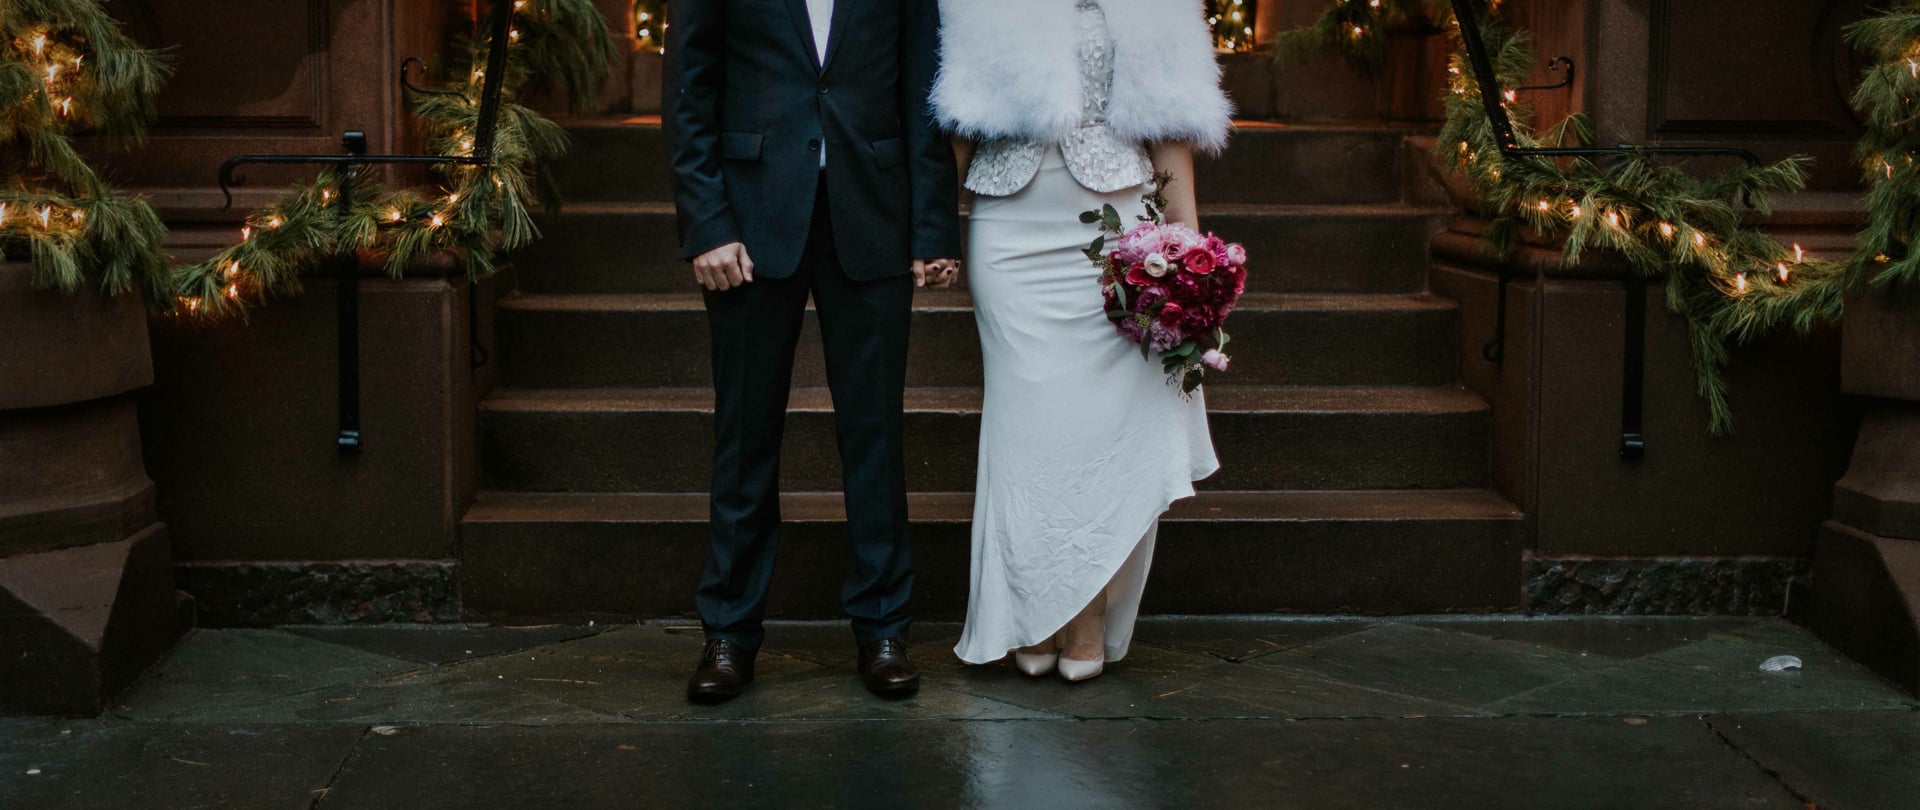 Jess & Dan Wedding Video Filmed at New York, United States